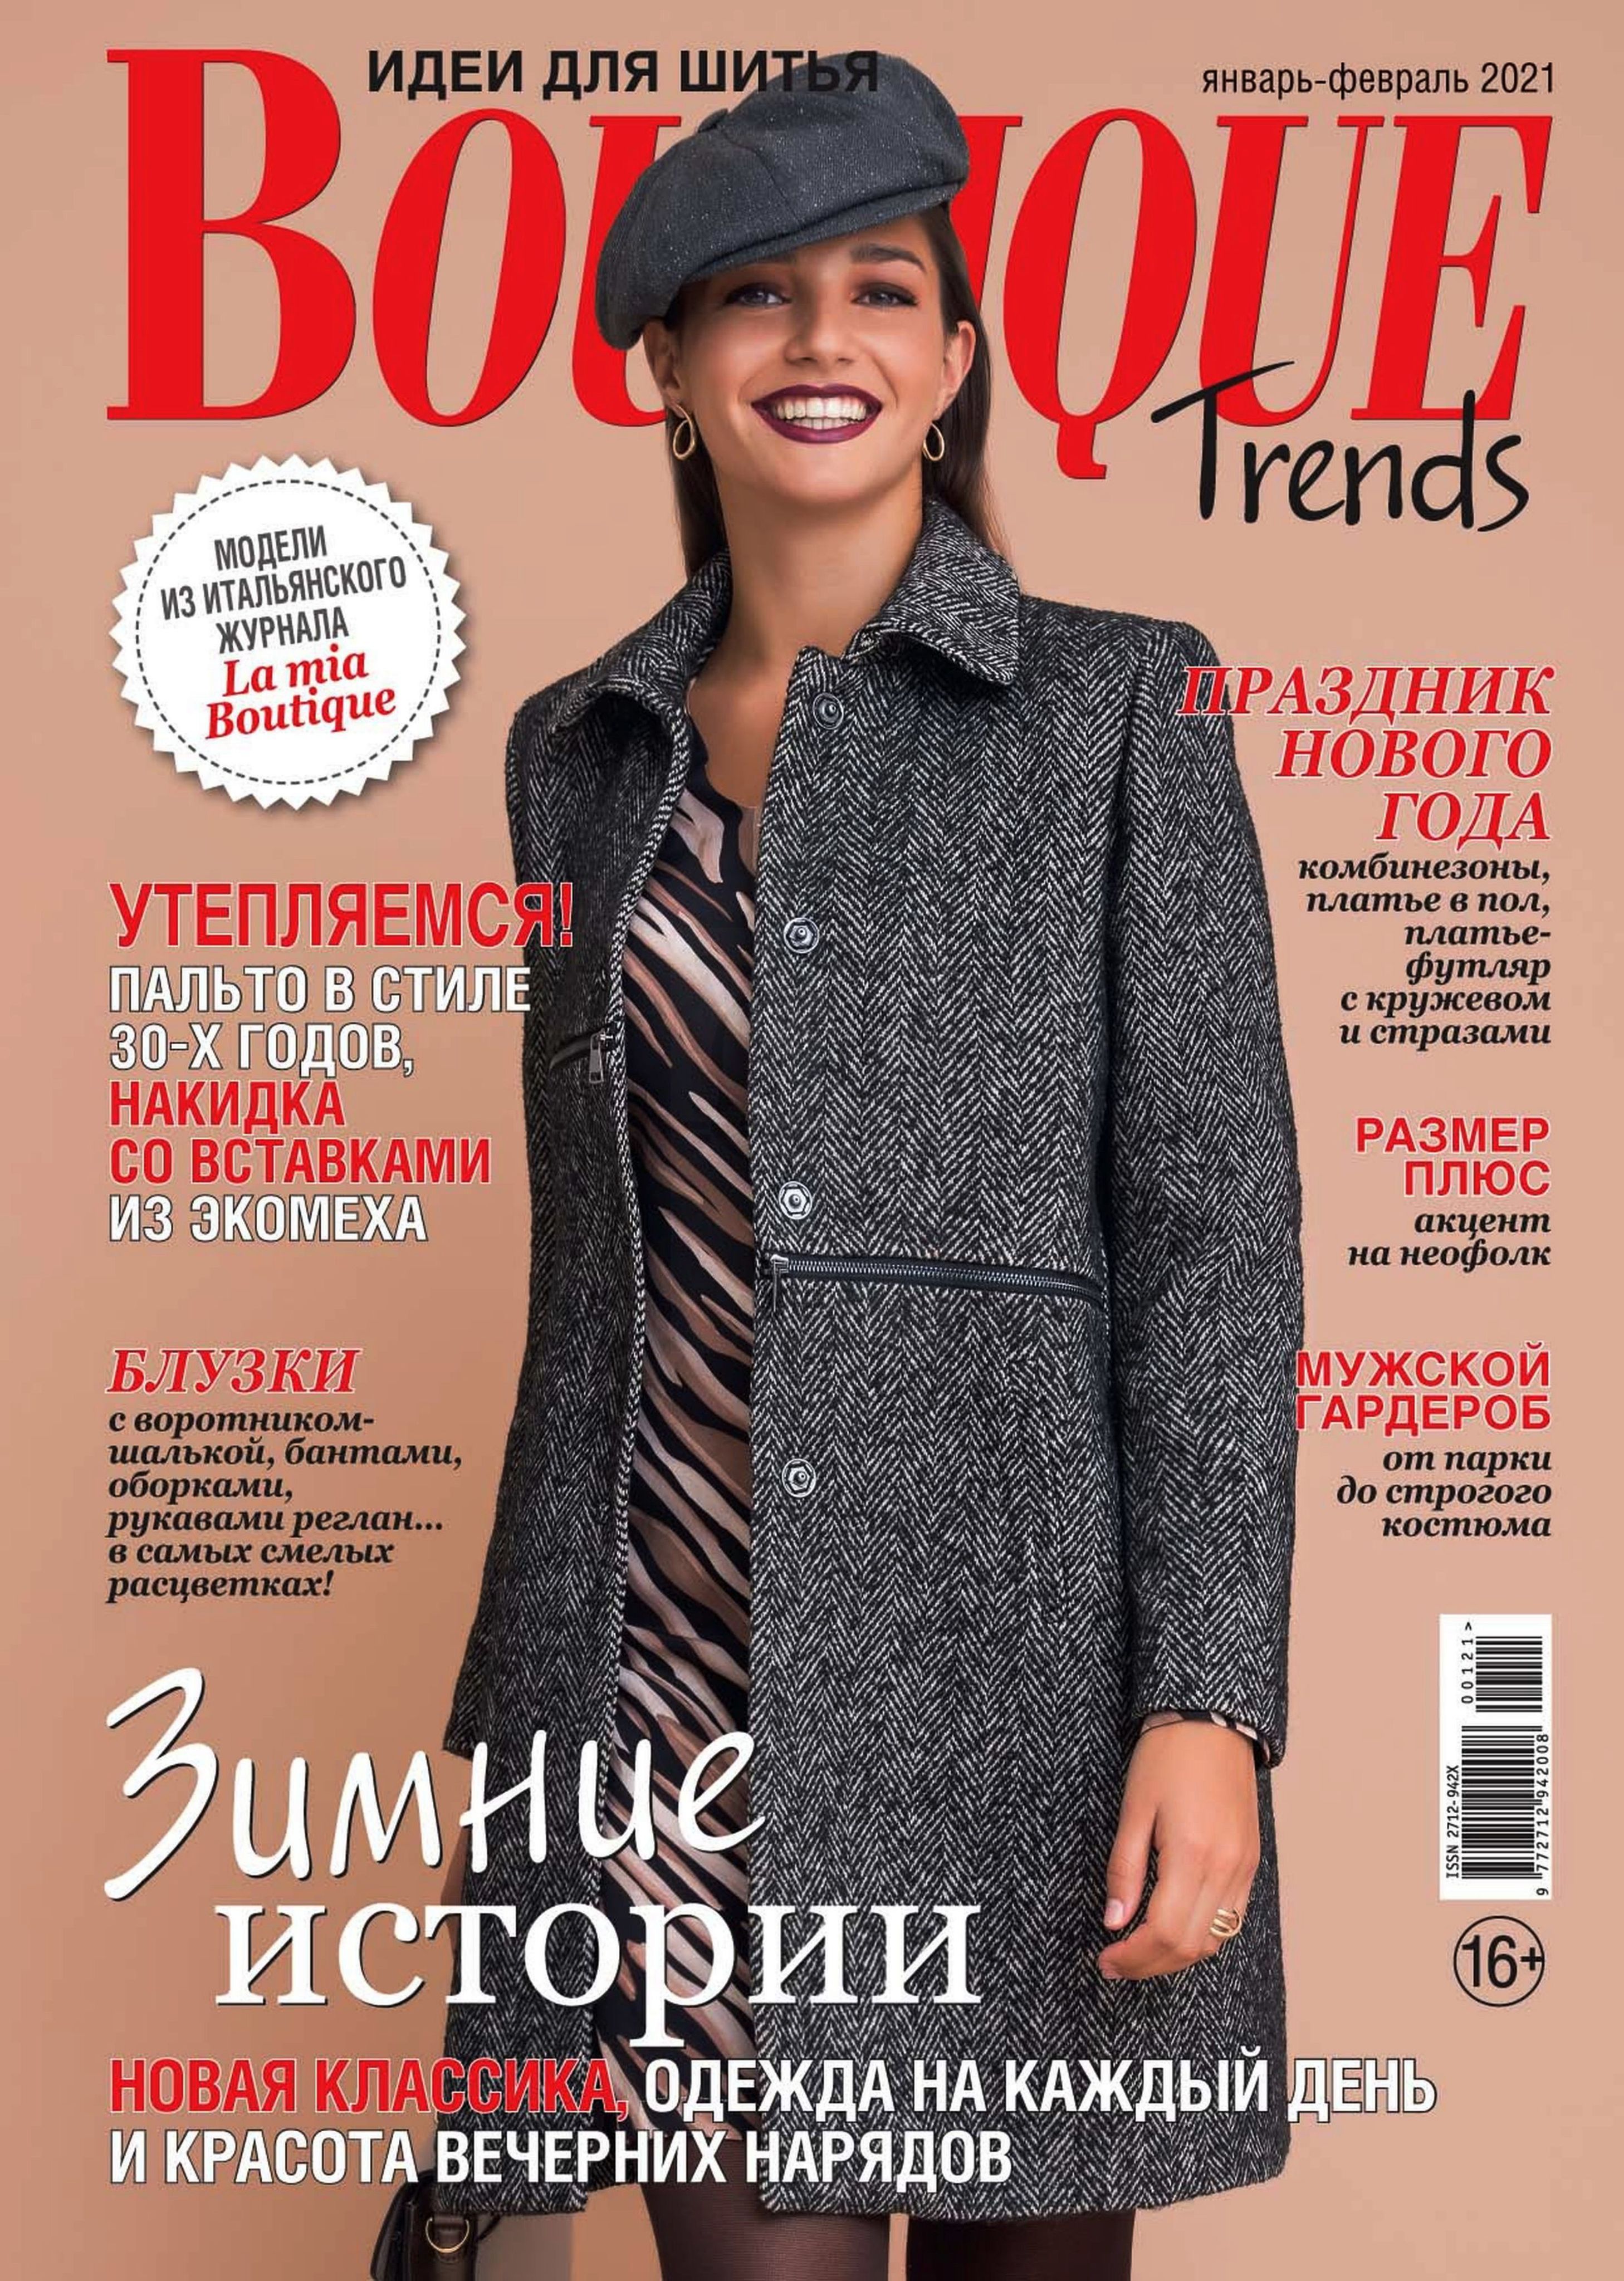 Trend boutique. Журнал бутик Boutique trends Бурда ноябрь 2020. Журнал Boutique. Обложка для журнала. Модели итальянского журнала Boutique.